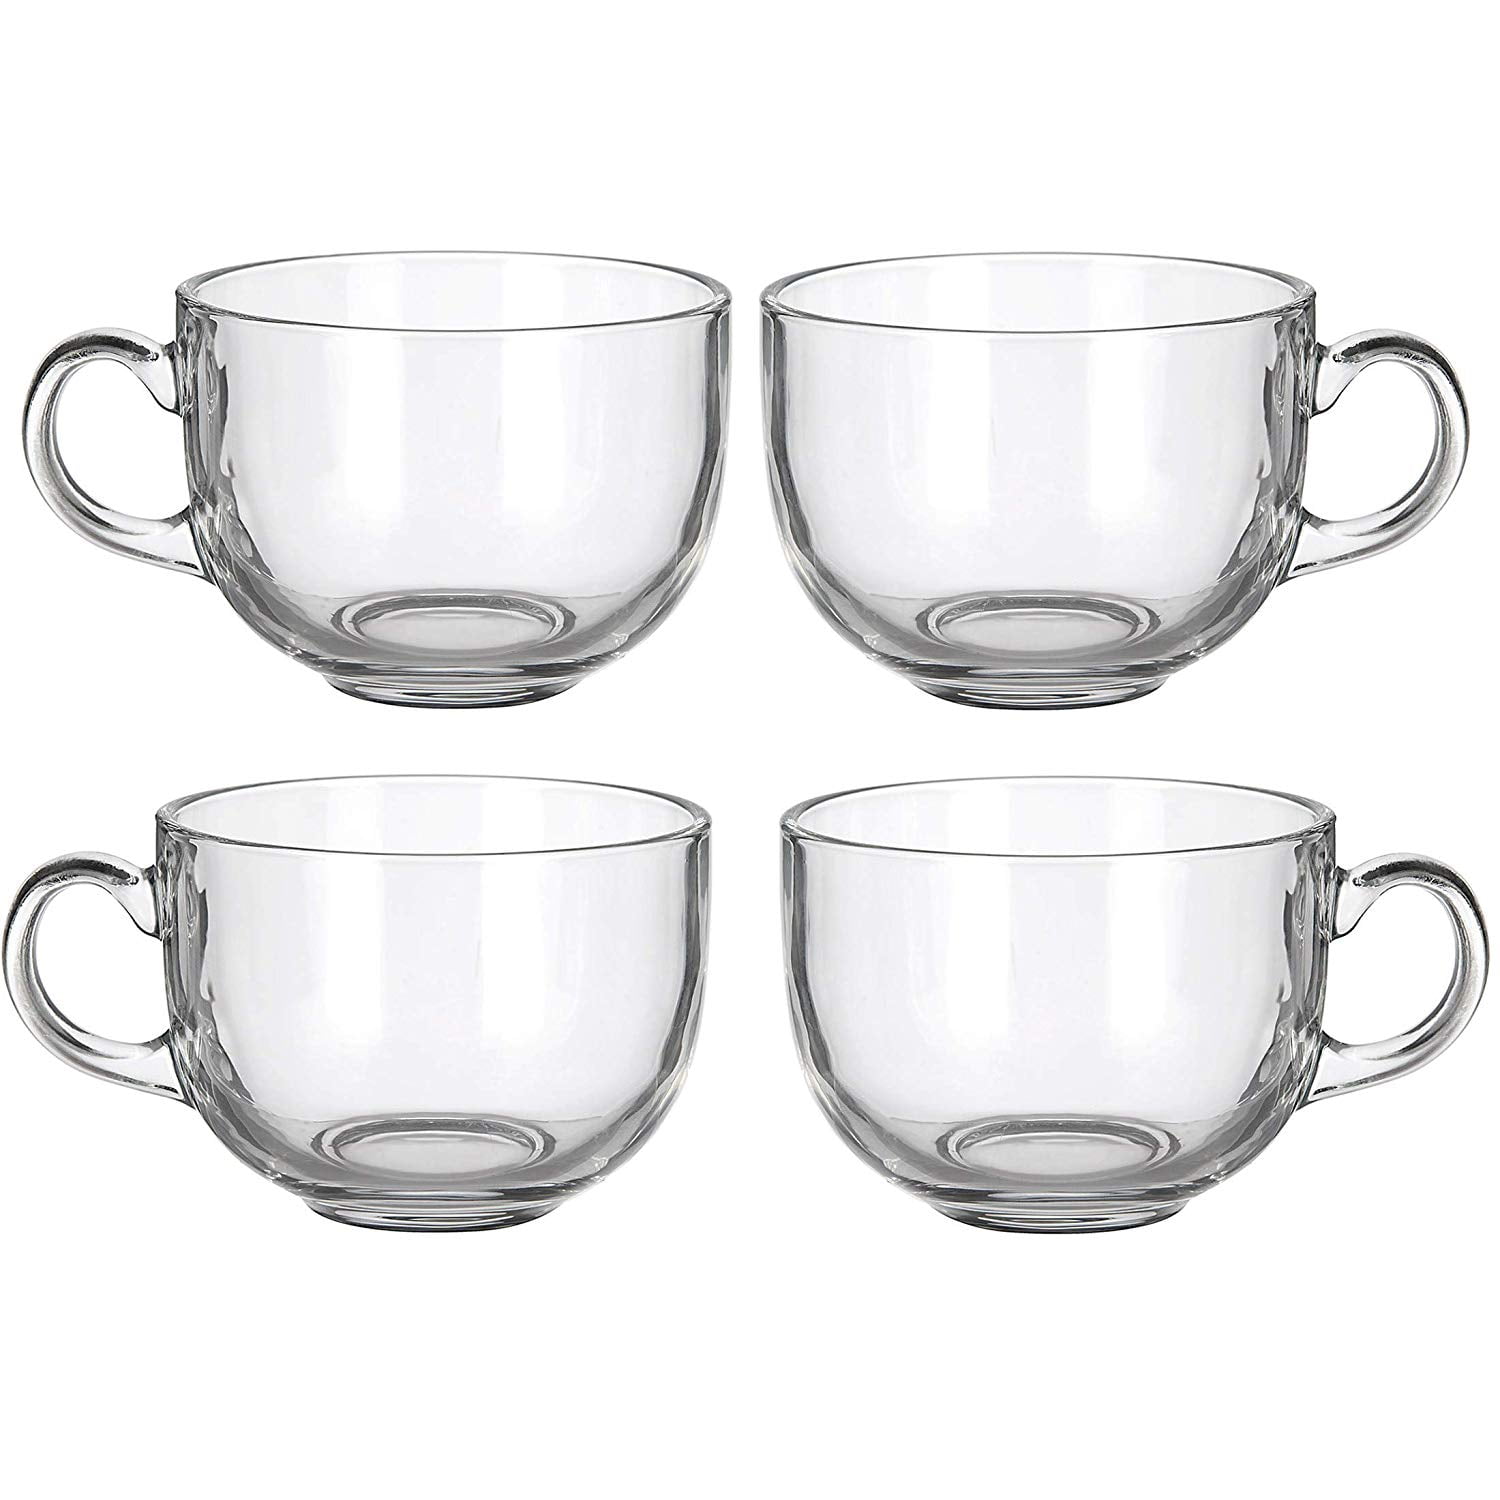 Brookline Ceramic Coffee Mug 16oz - Tea Mug with Handle, Expresso Cups, Size: 1 Pack - 16 fl oz, White